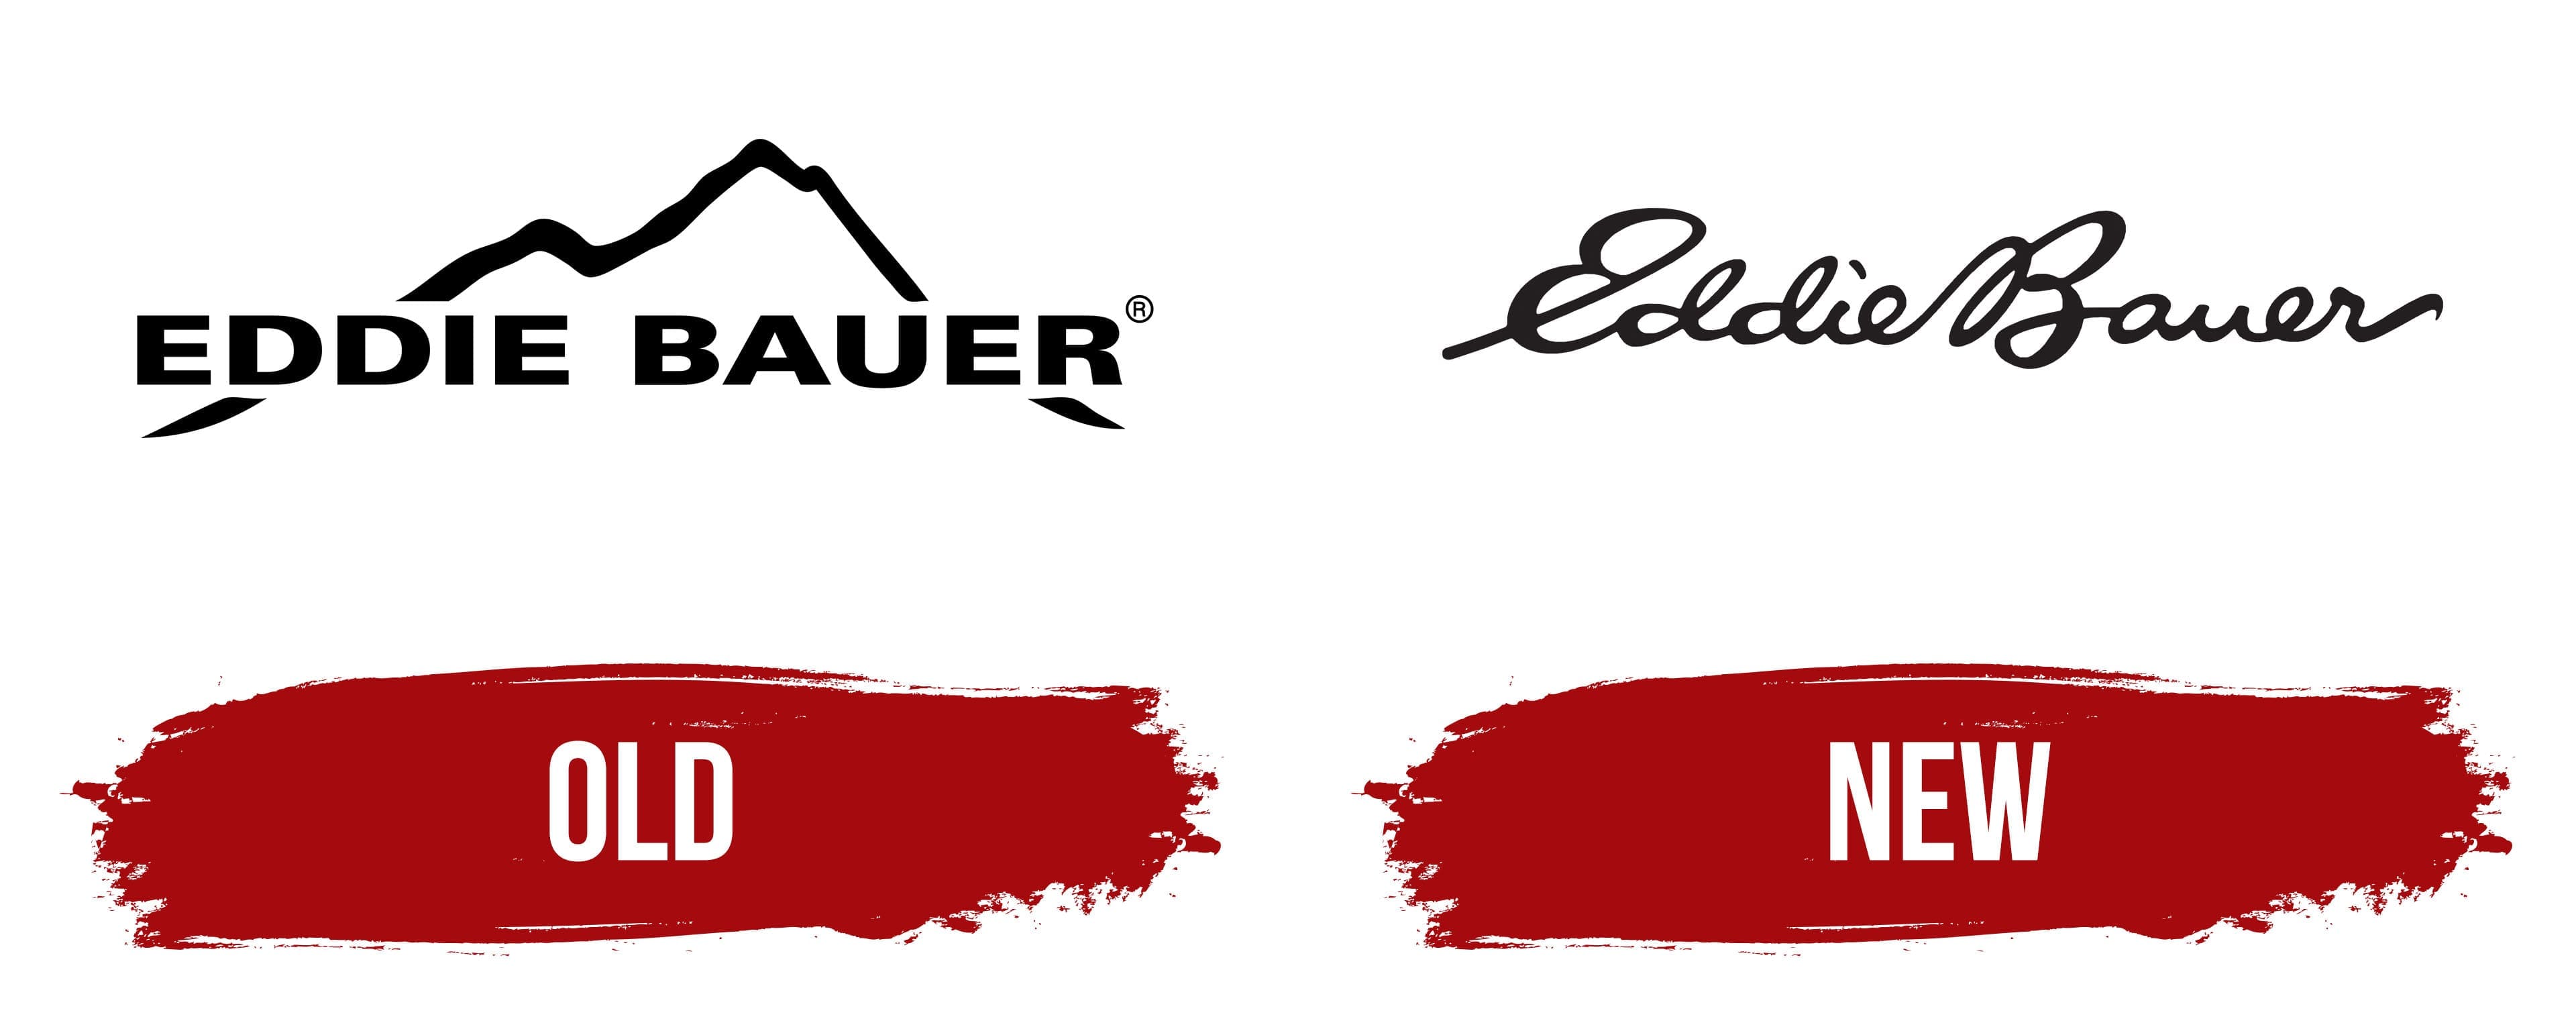 Clothing brand Eddie Bauer modernizes its identity with new symbol